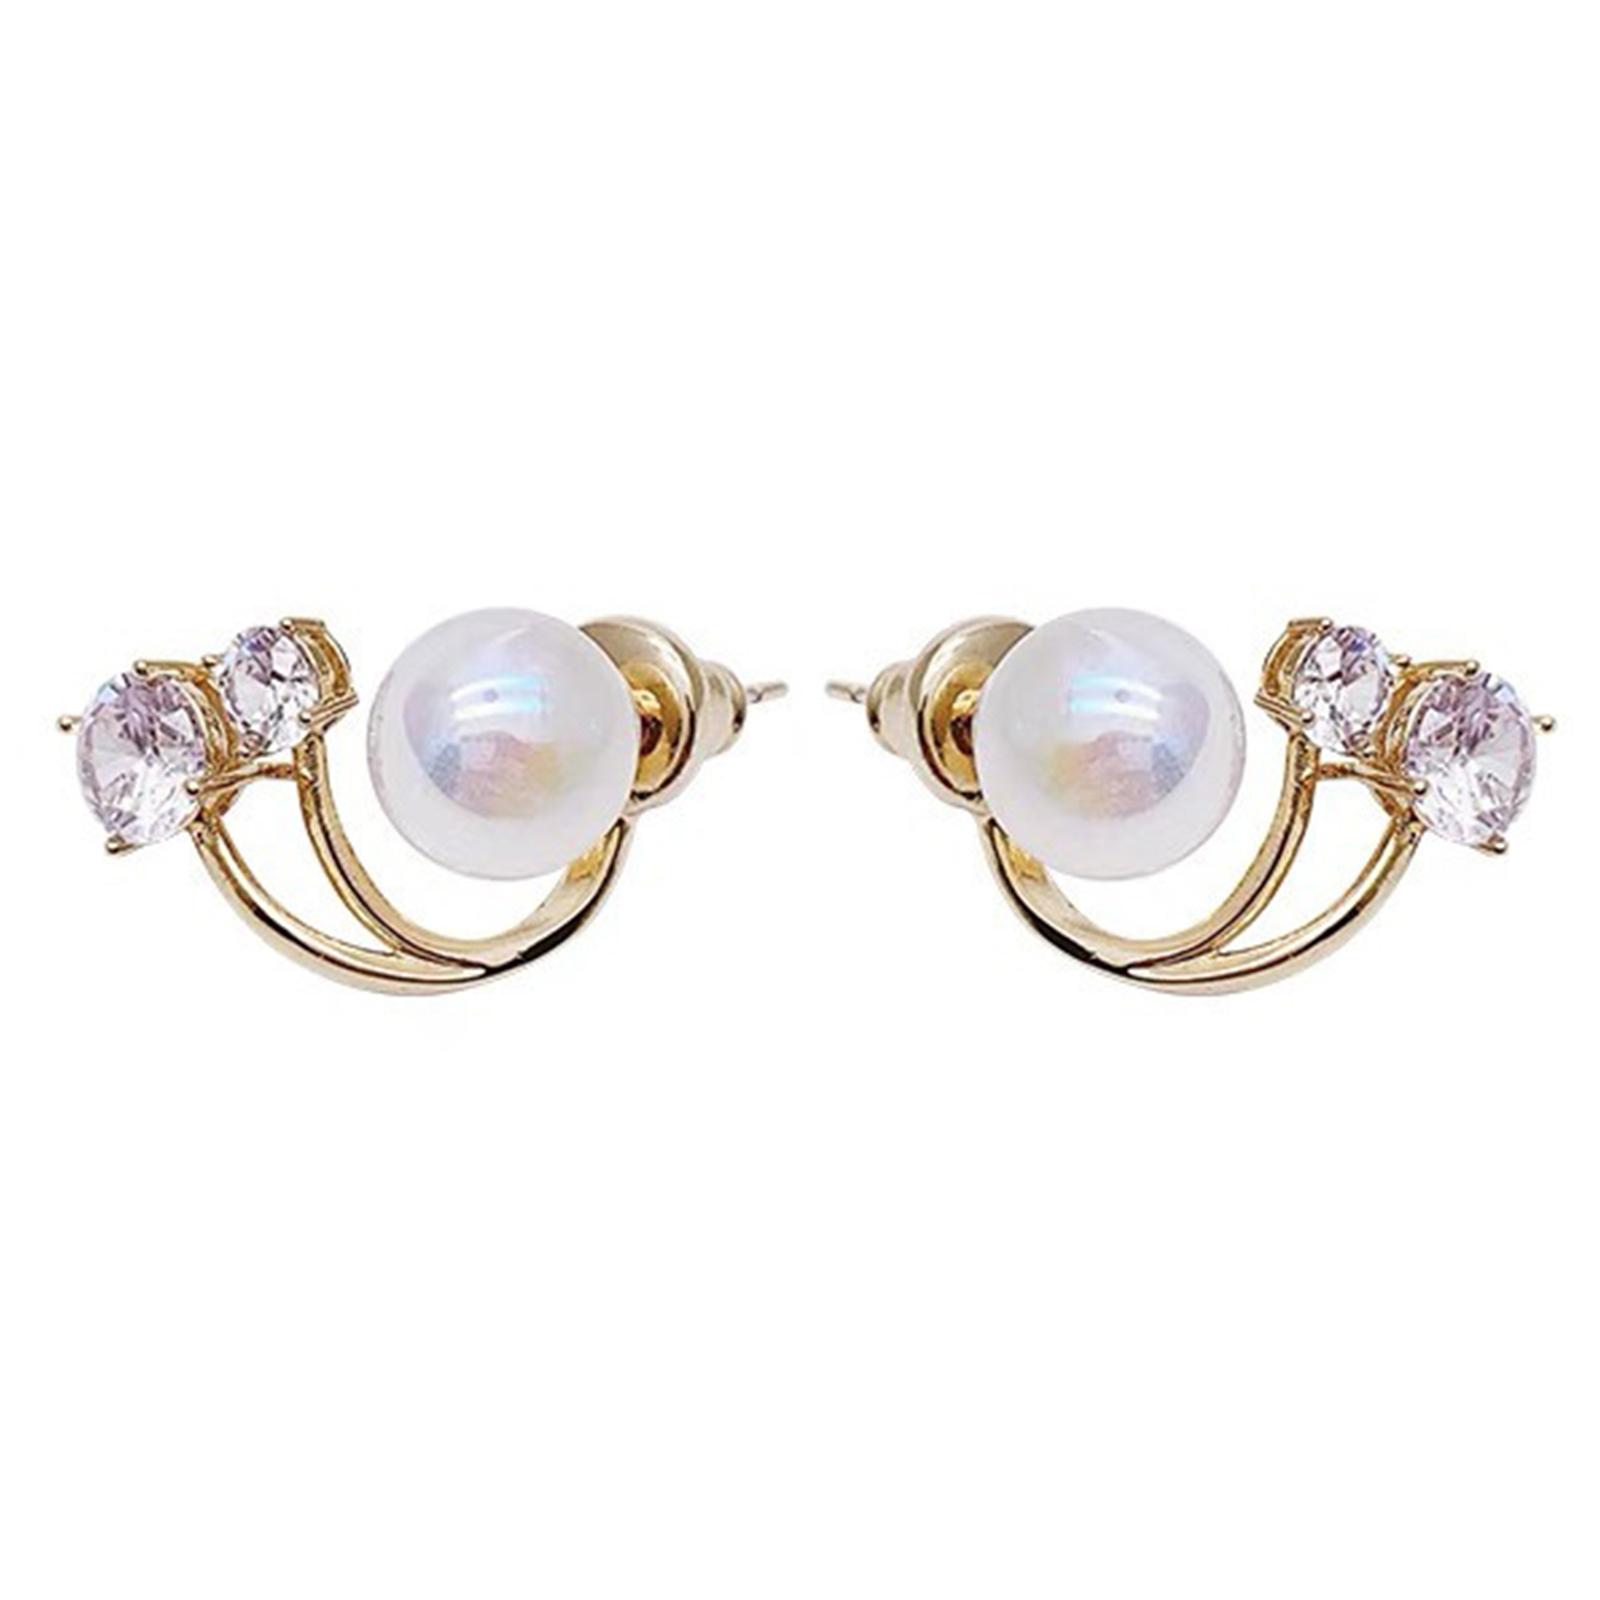 Fashion Rhinestone Crystal Pearl Ear Stud Earrings Jewelry Gift Women G3C9 - image 5 of 9